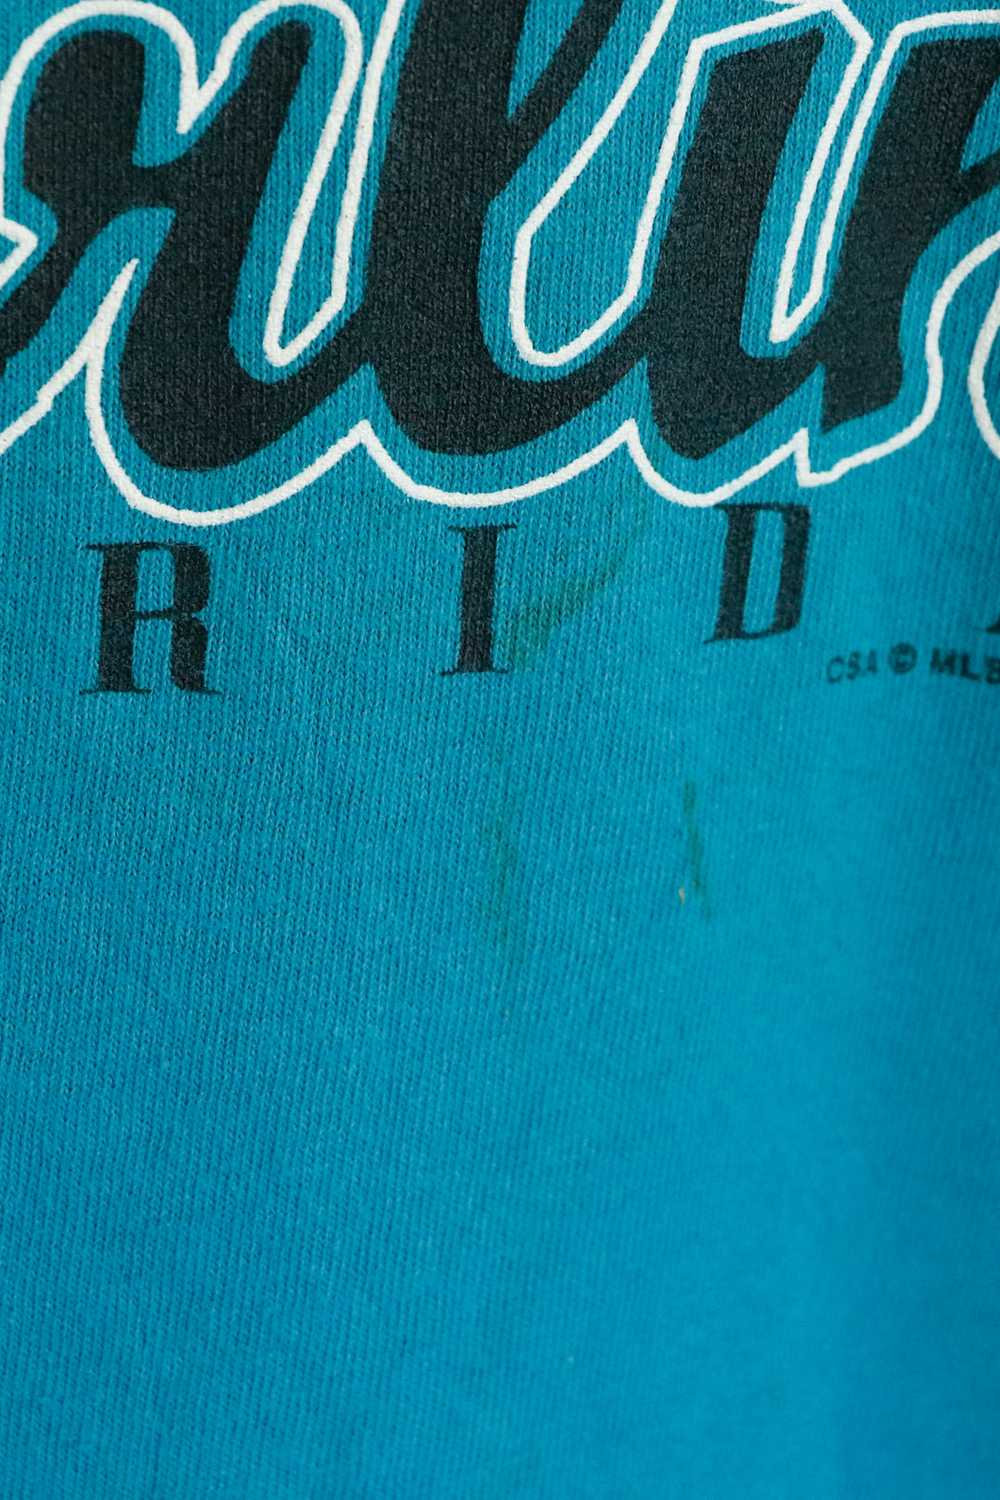 Vintage 1997 MLB Florida Marlins T Shirt Sz XL - image 4